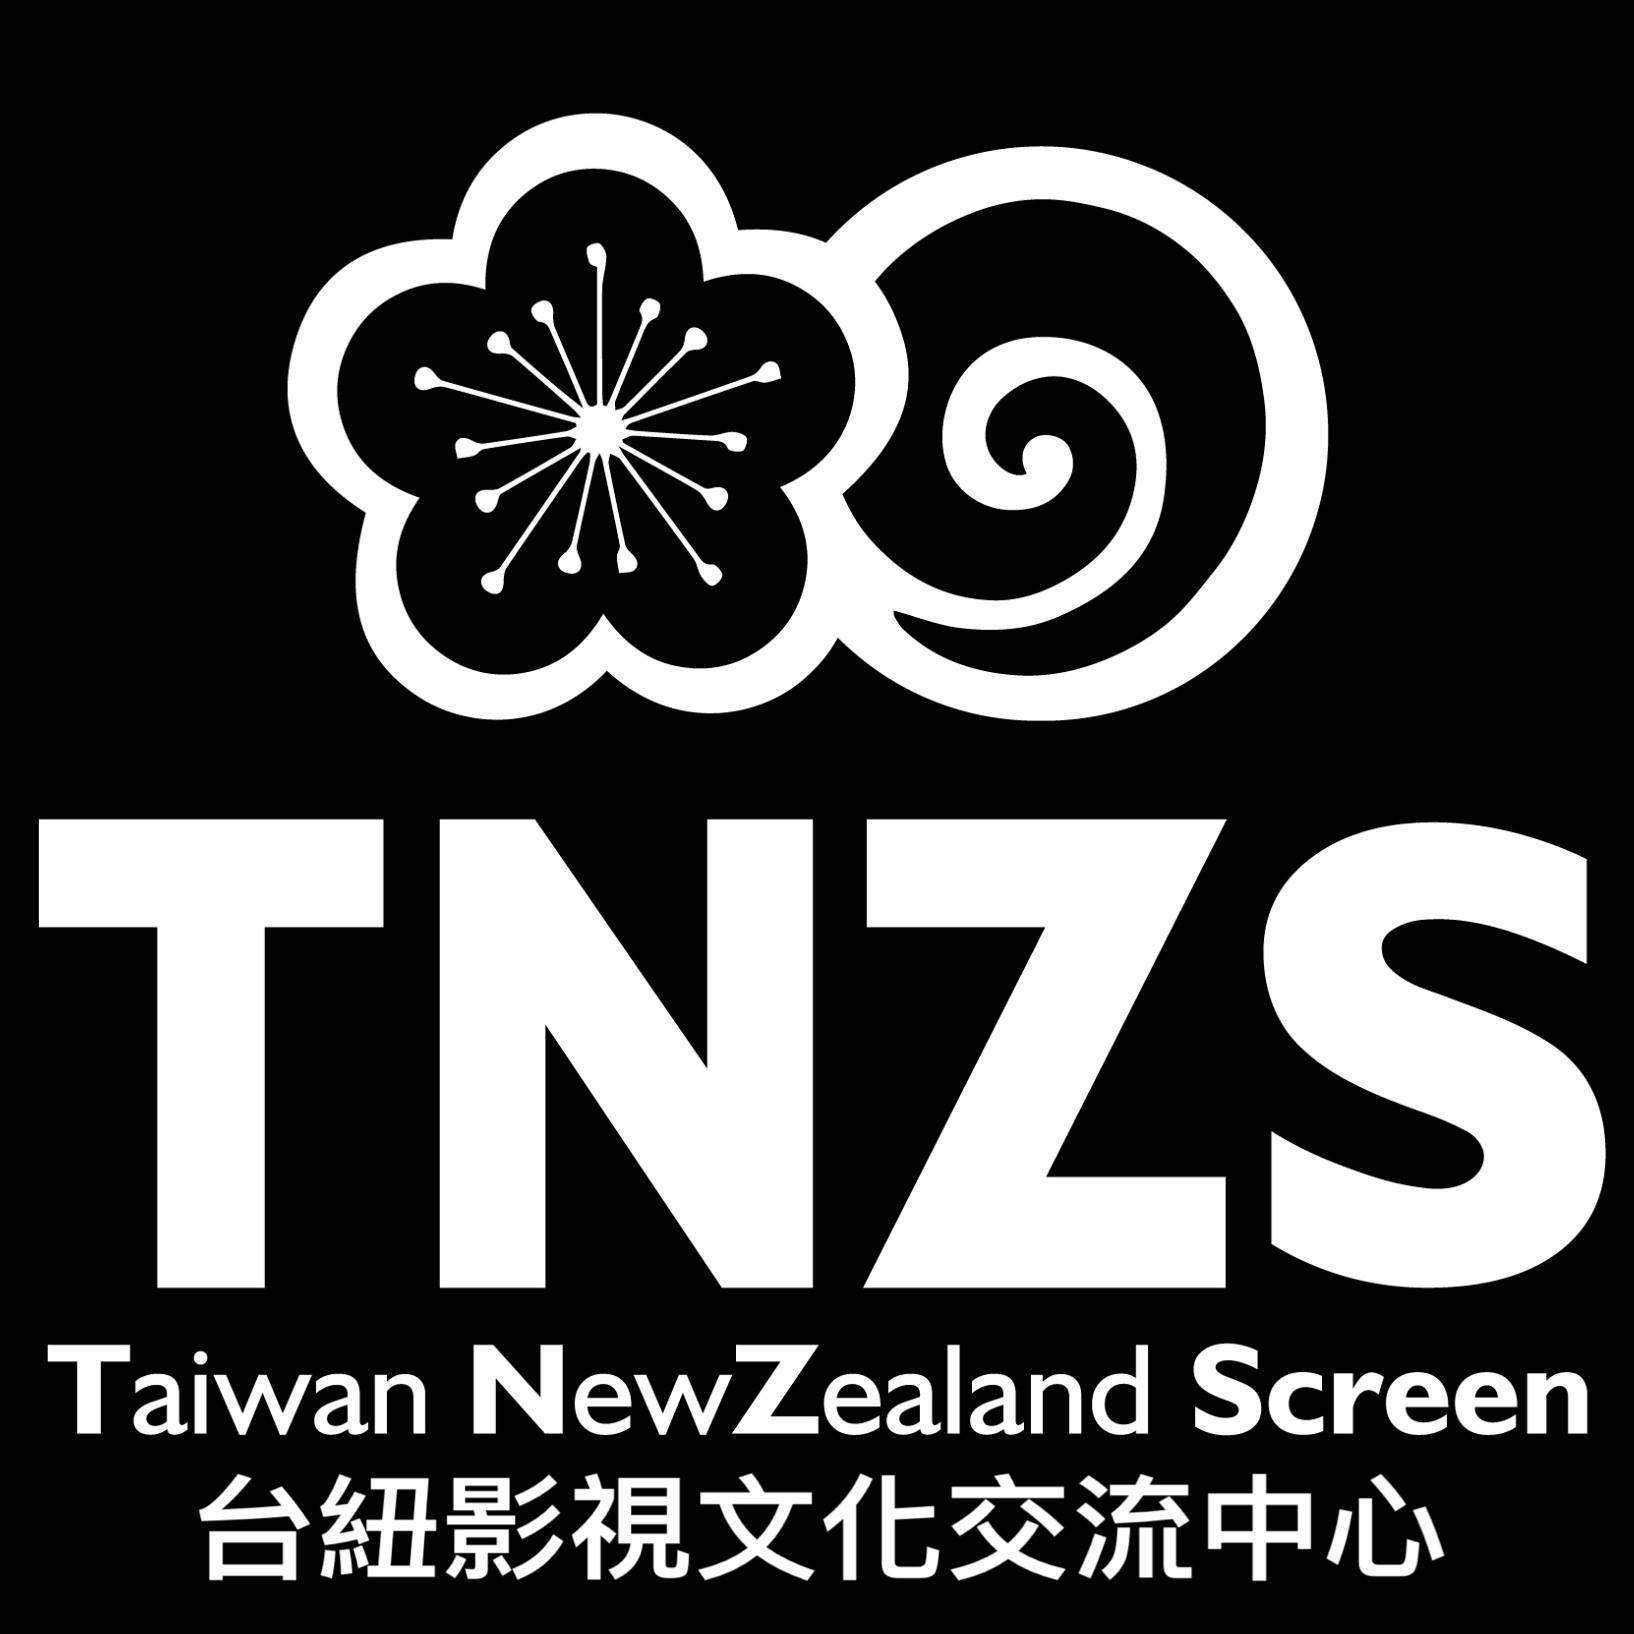 tnz screen.jpg